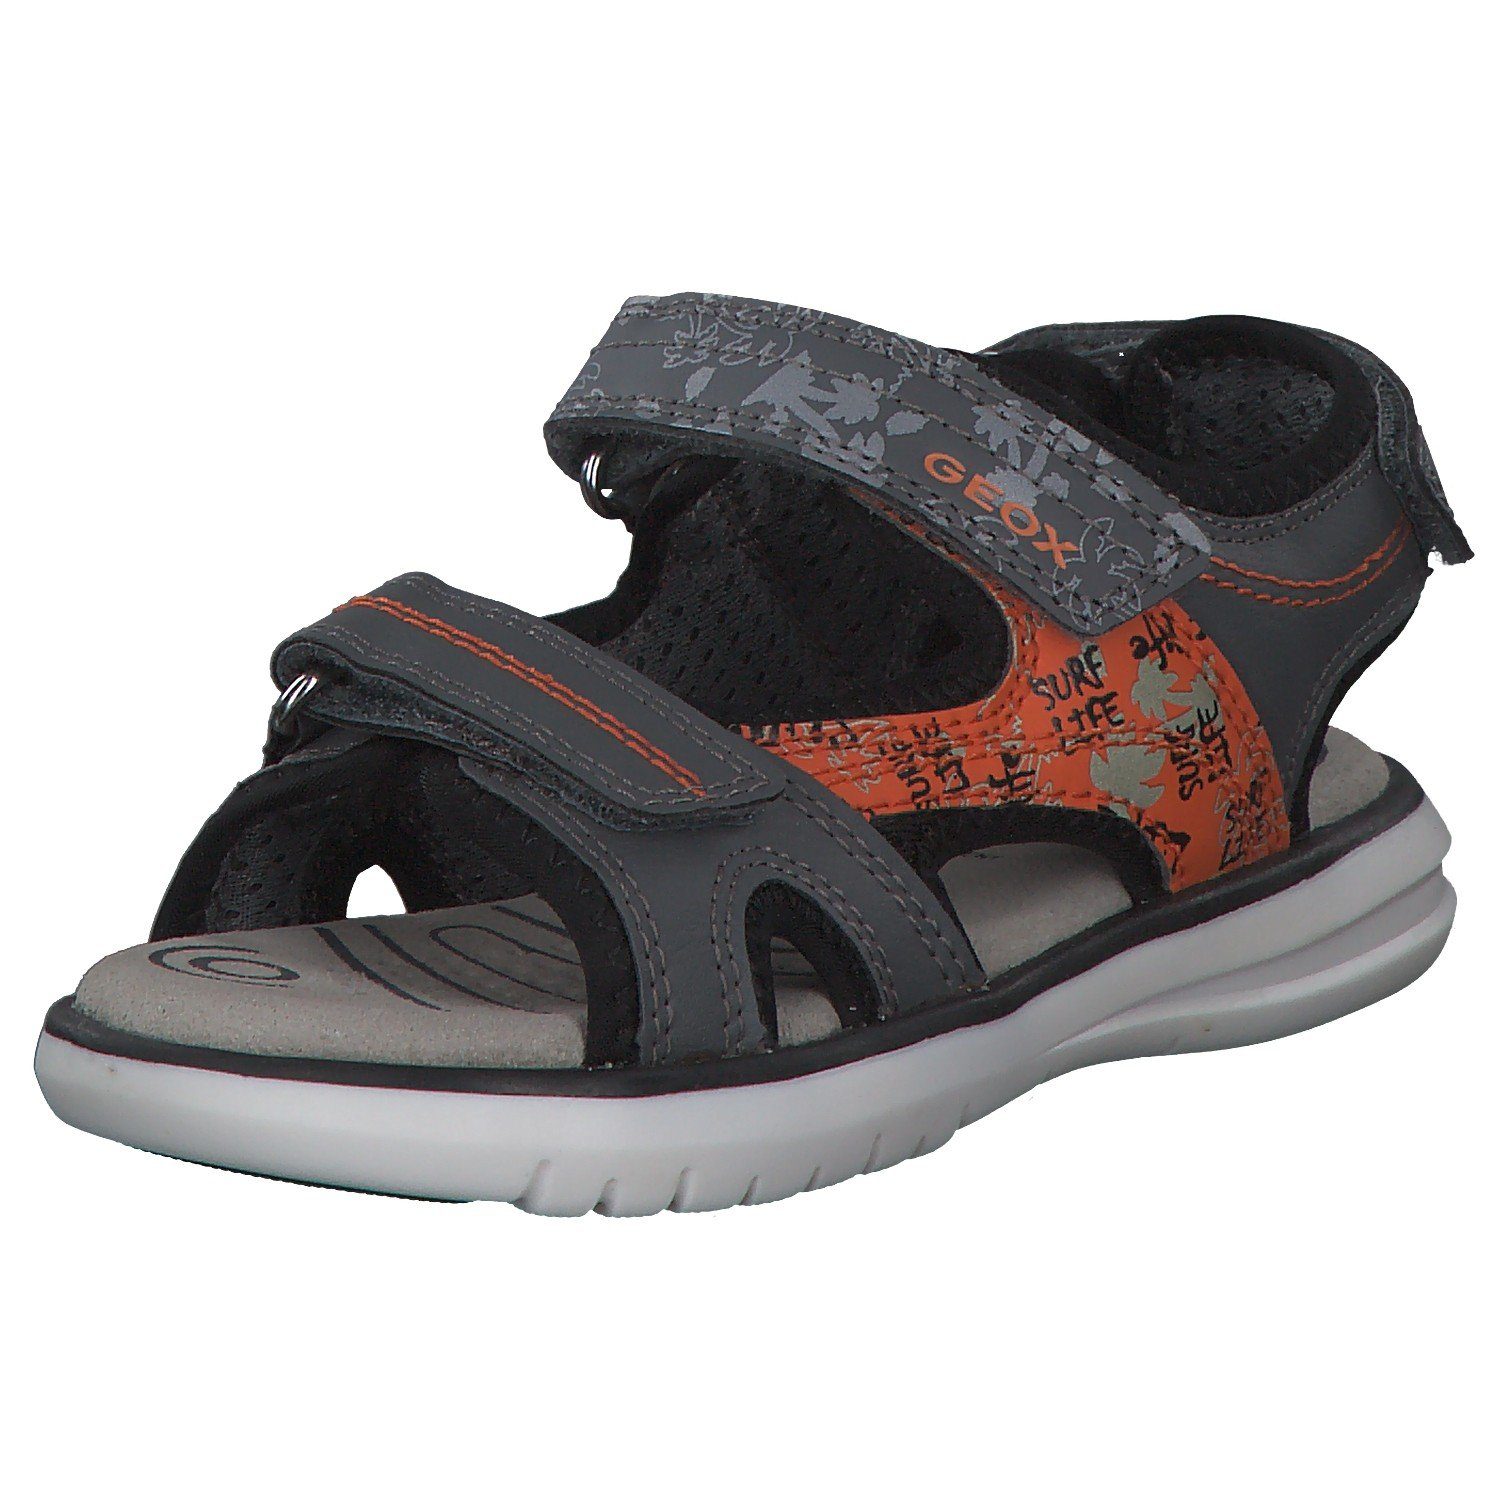 Geox Geox J15DRD Sandale online kaufen | OTTO